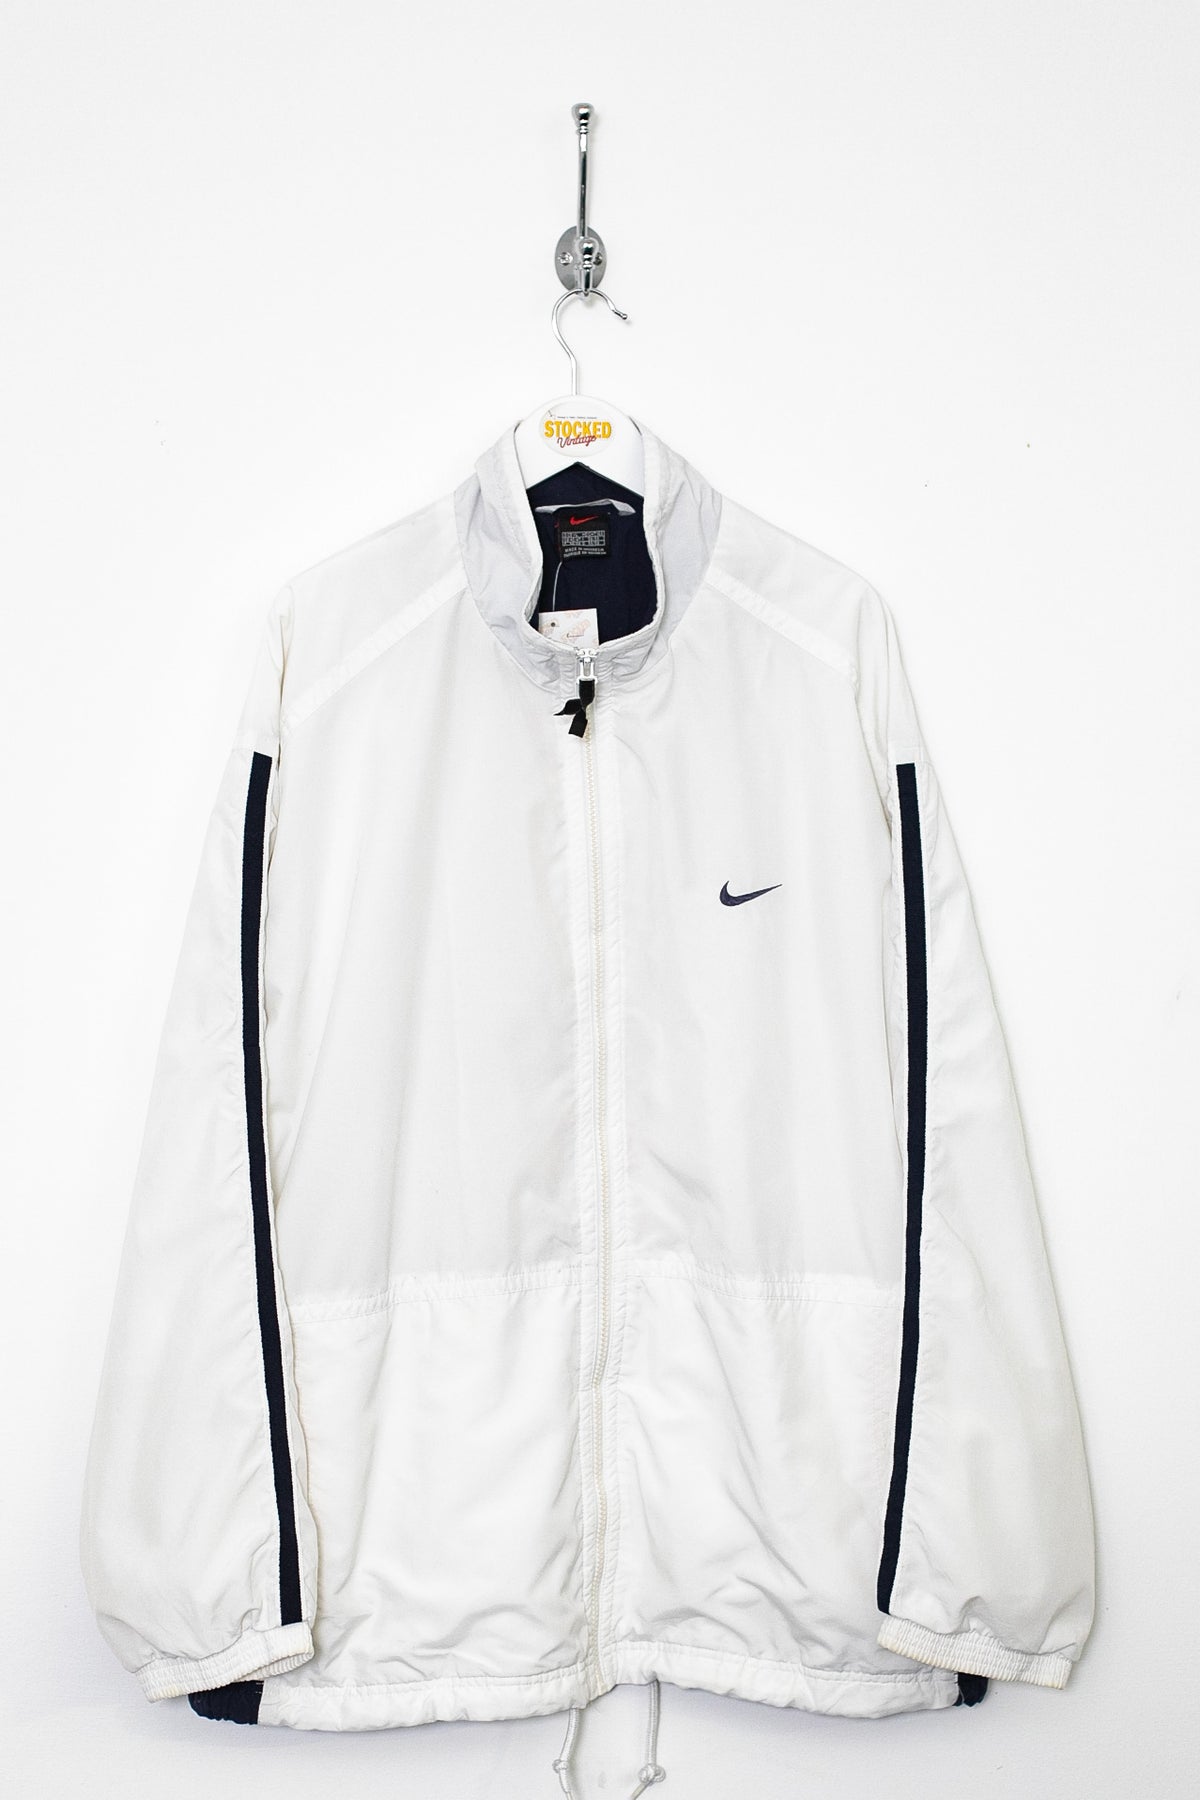 00s Nike Jacket (XL)